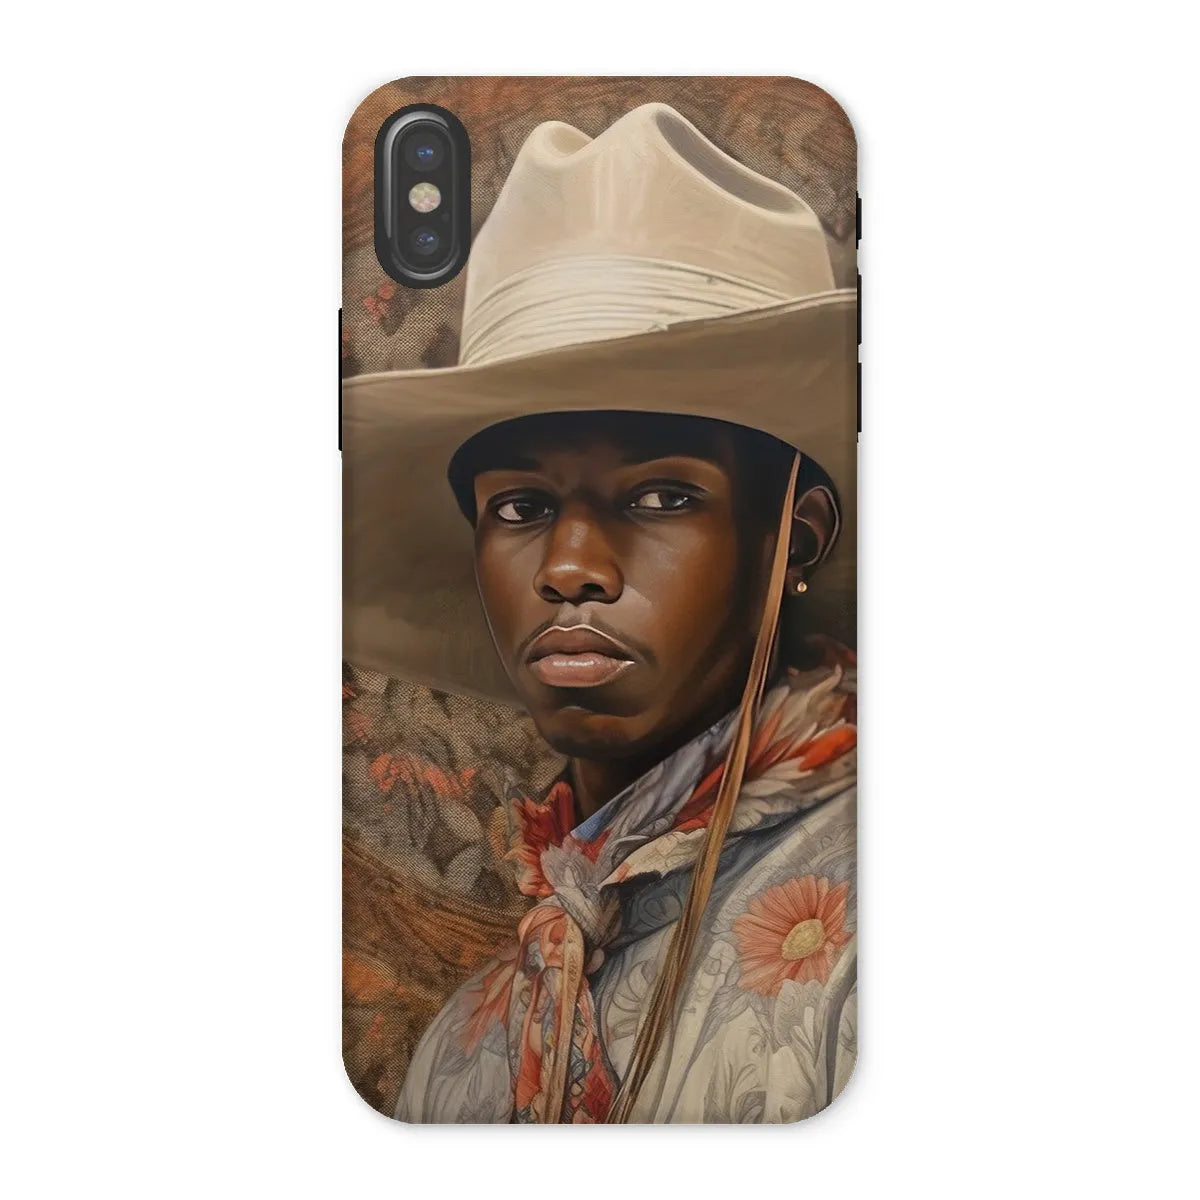 Titus The Gay Cowboy - Dandy Gay Men Art Phone Case - Iphone x / Matte - Mobile Phone Cases - Aesthetic Art